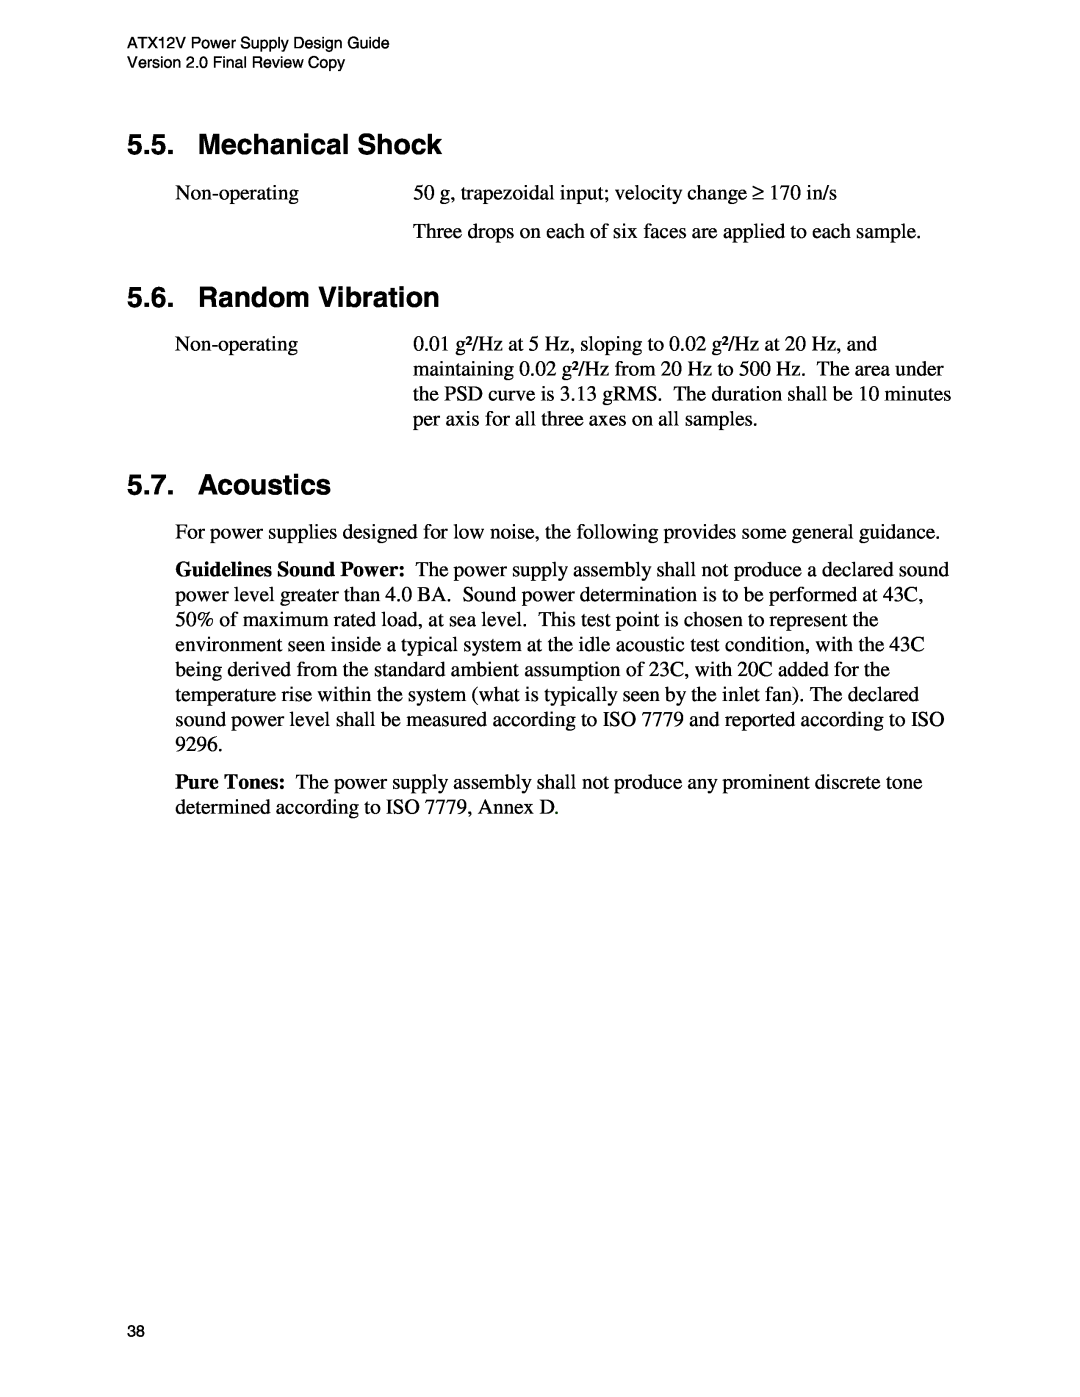 Intel Mechanical Shock, Random Vibration, Acoustics, ATX12V Power Supply Design Guide Version 2.0 Final Review Copy 